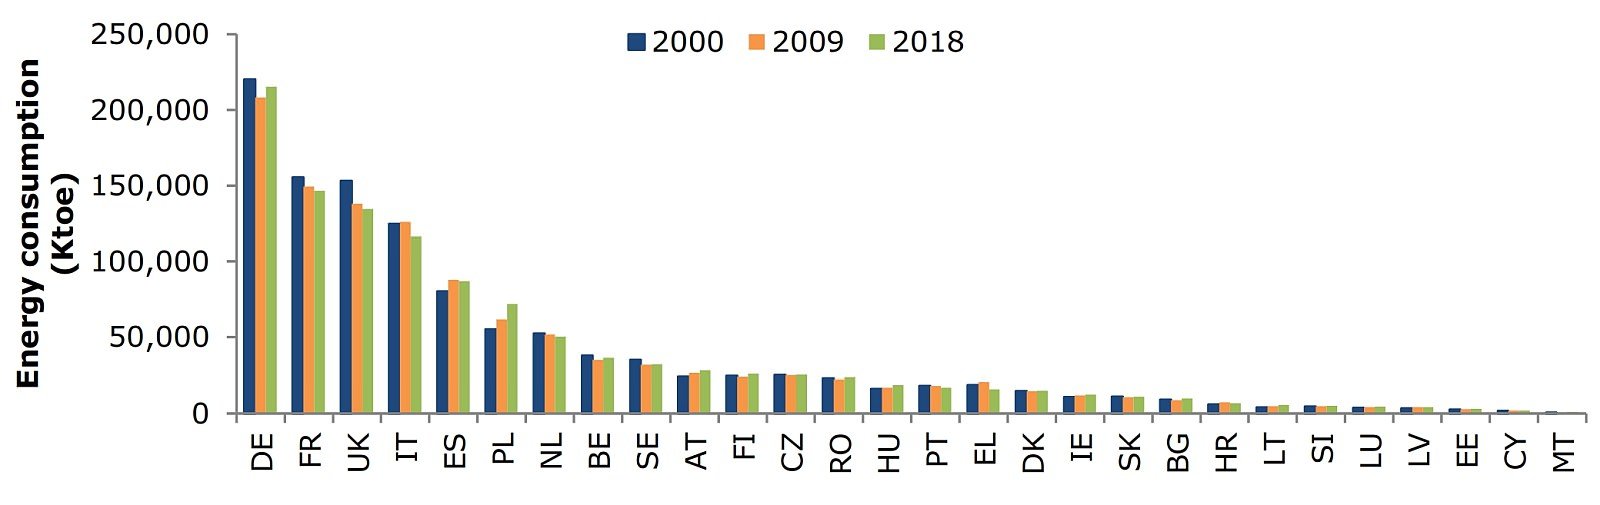 energieverbrauch eu mitgliedsstaaten vergleich eu28 2000 2009 2018